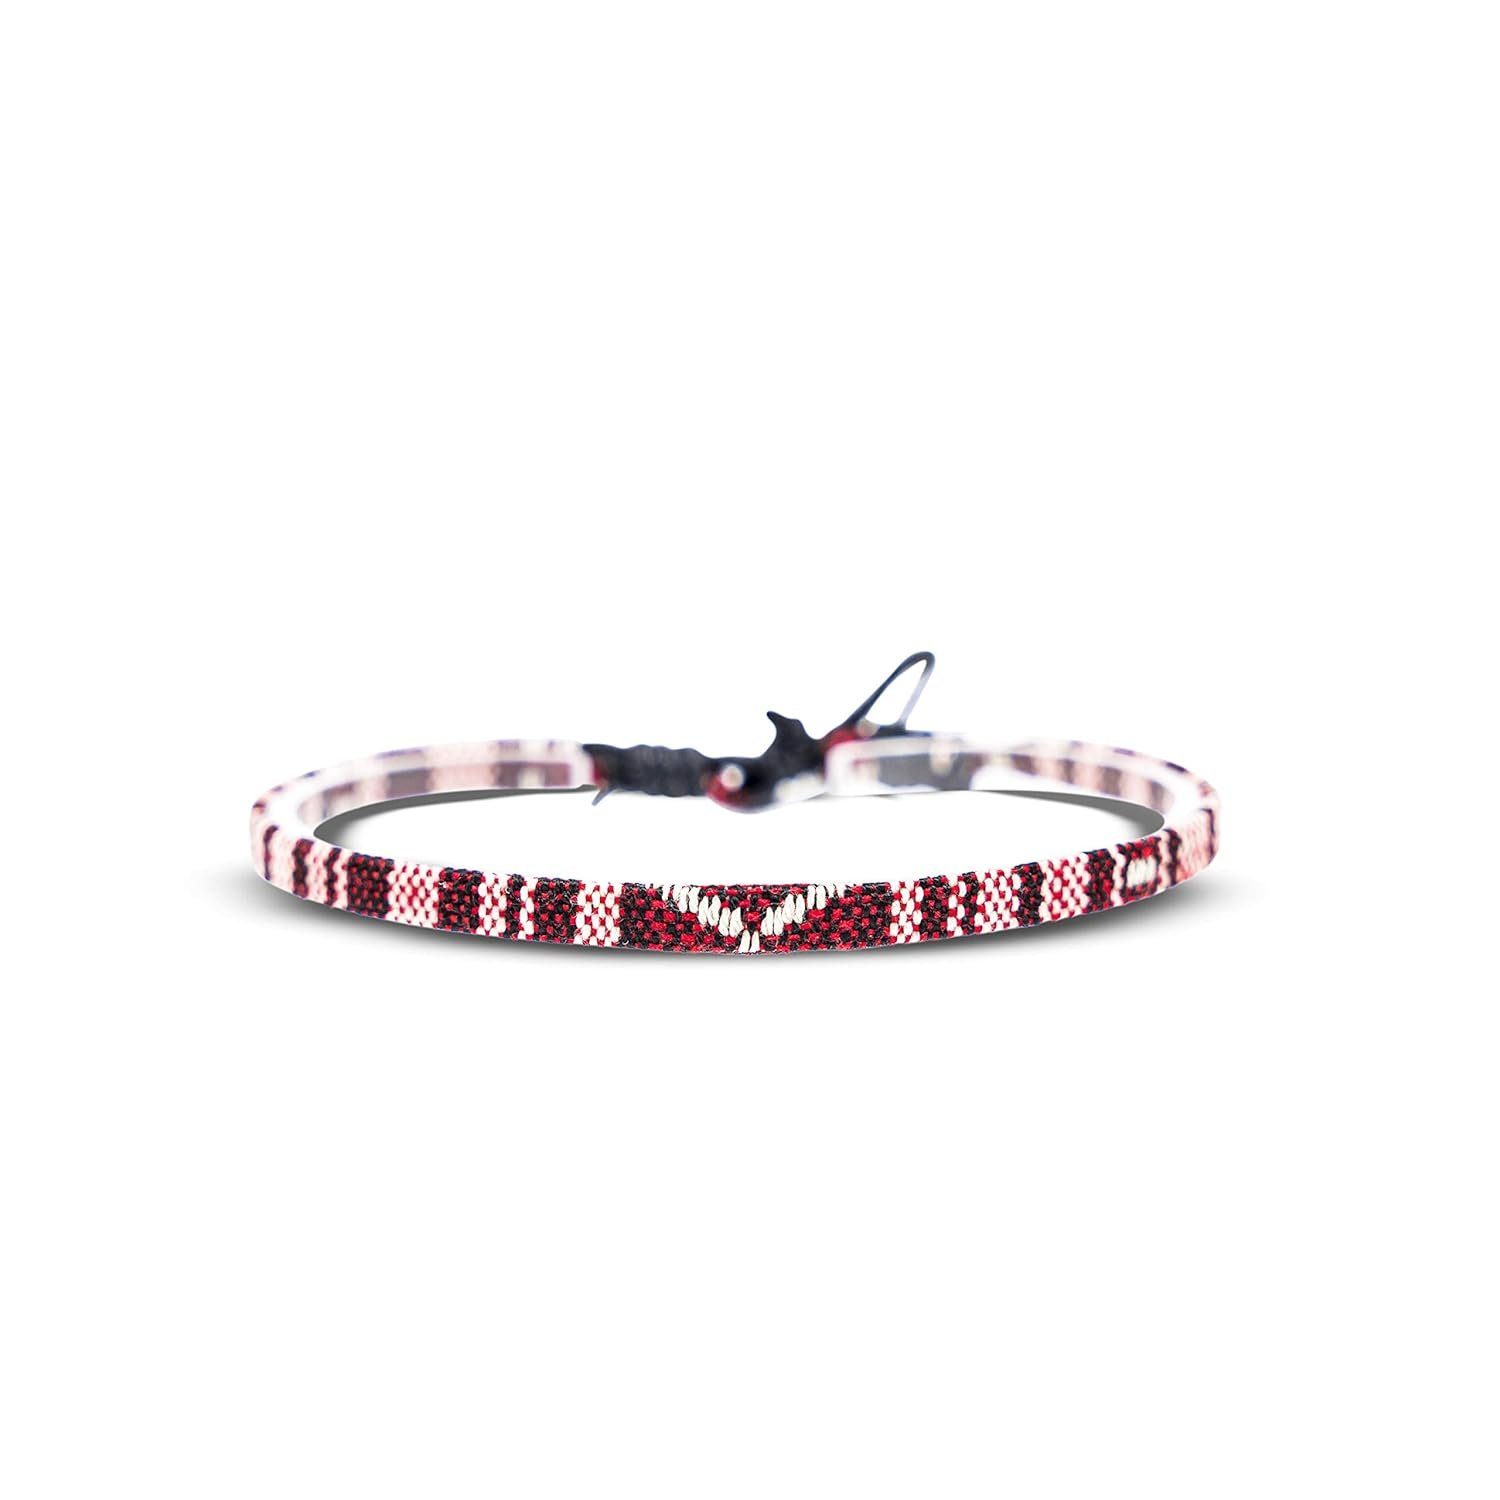 Made by Set Armband (Set, Nami Herren Boho Style Freundschaftsarmbänder Armband Perlenarmband Handgemacht Weinrot Armband Boho Lavastein 2), 2x Damen & & Surfer